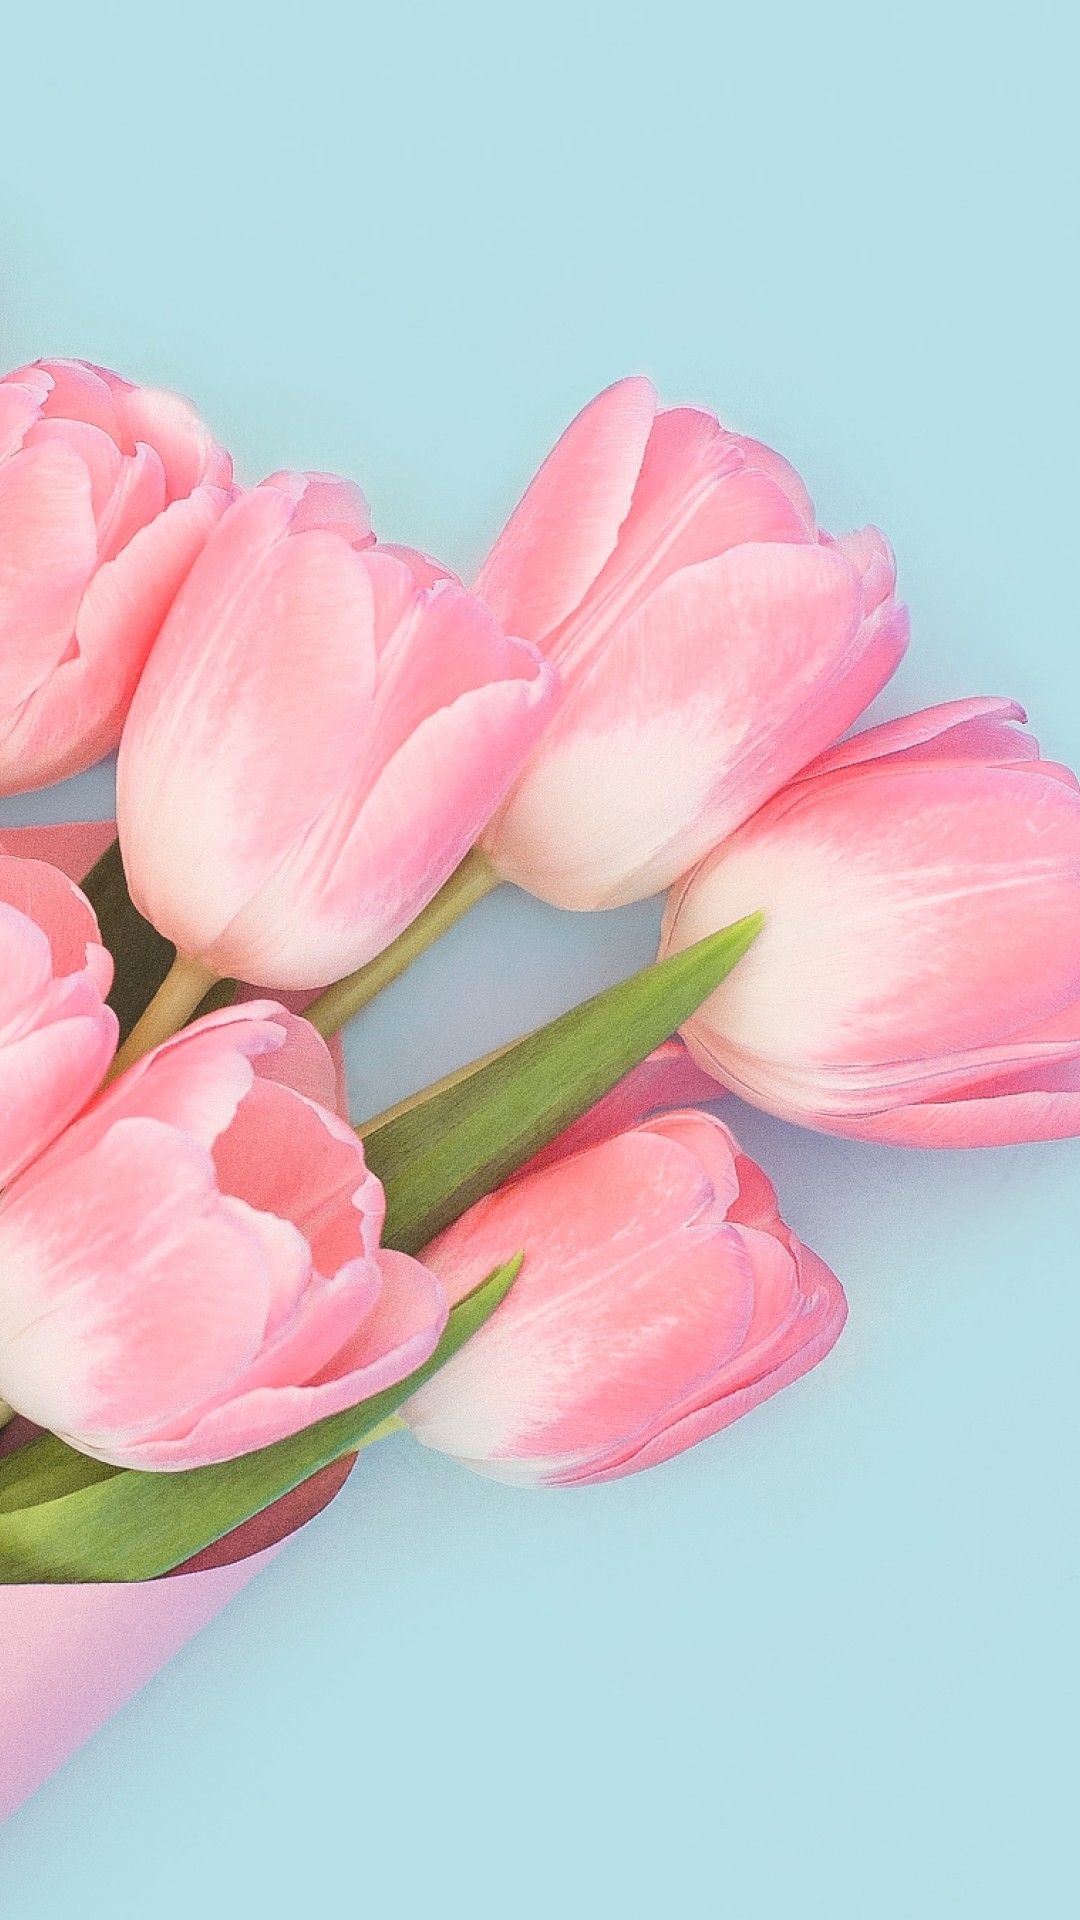 Free Download Beautiful Pink Tulips Flower Wallpaper for Desktop